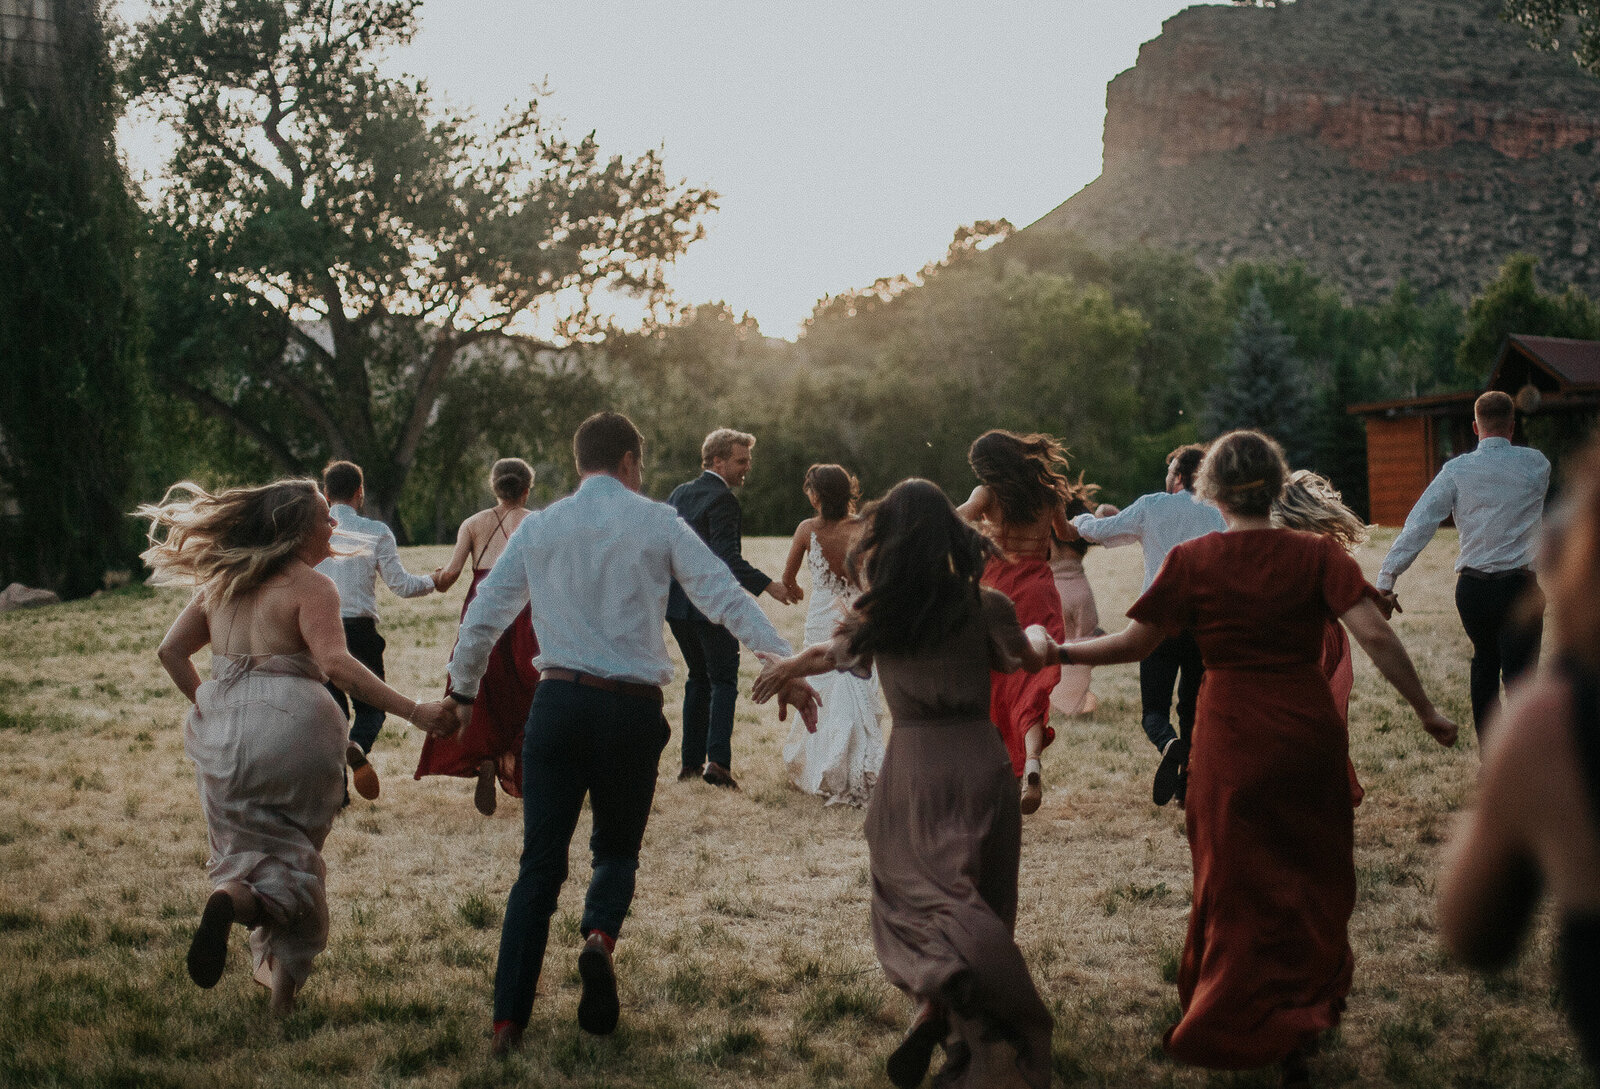 Fun photo of wedding party dancing at elopement wedding in colorado.